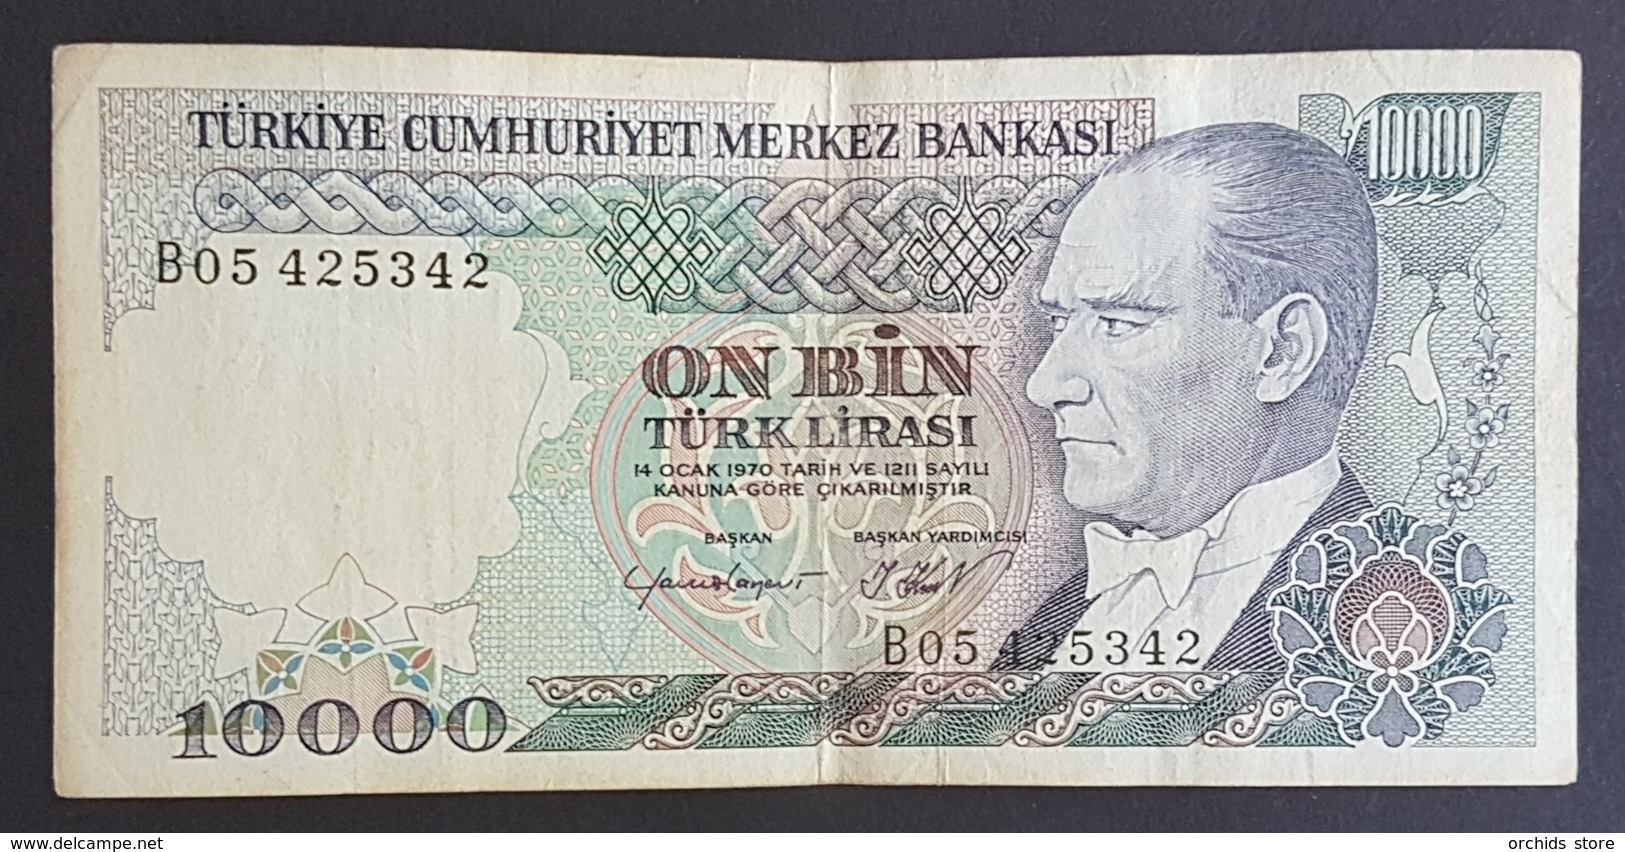 RS - Turkey Banknote 1982 1000 LIRAS P.205a PREFIX B Rare #B05 425342 - Turquia